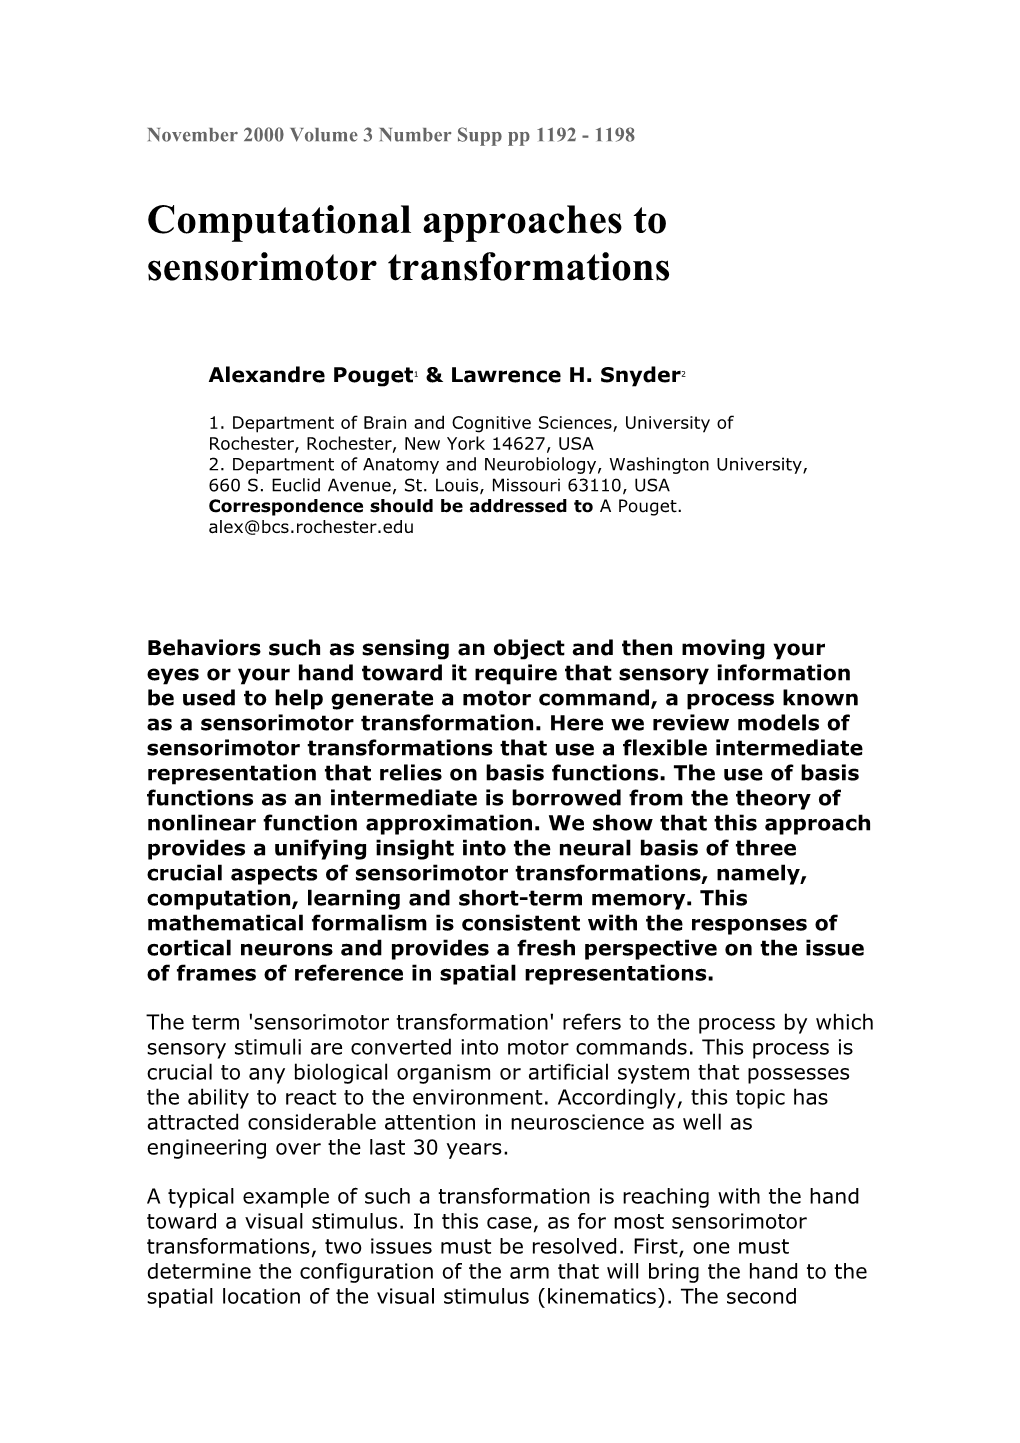 Computational Approaches to Sensorimotor Transformations